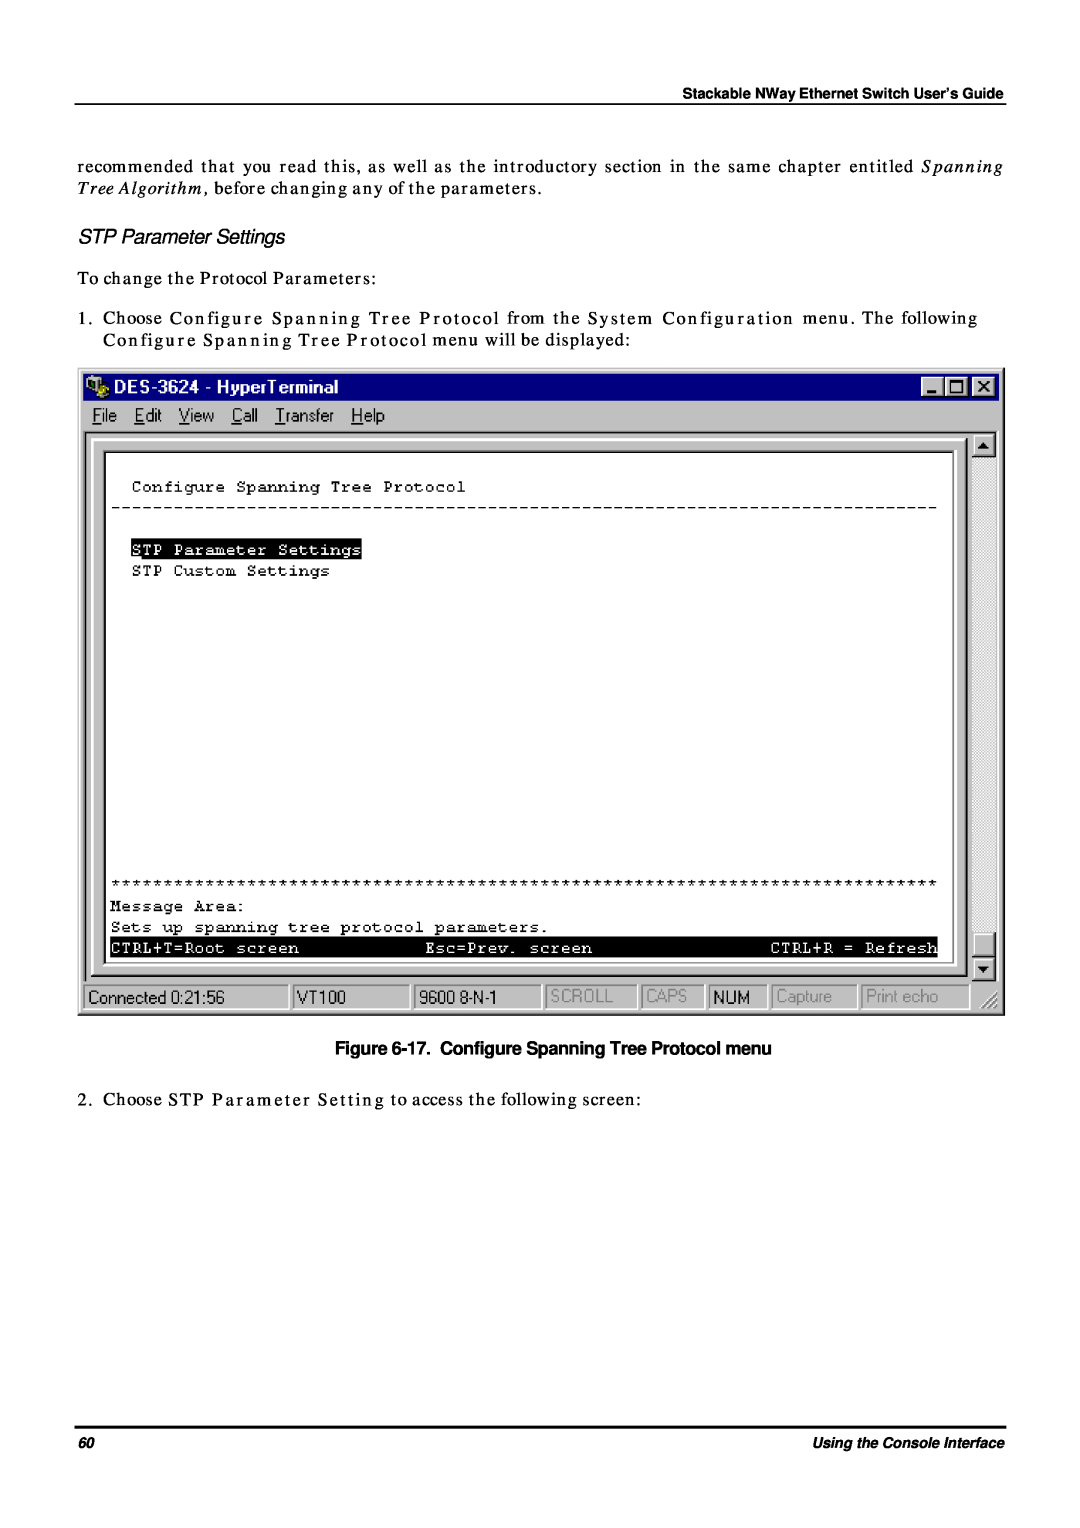 D-Link DES-3624 manual STP Parameter Settings, 17. Configure Spanning Tree Protocol menu 